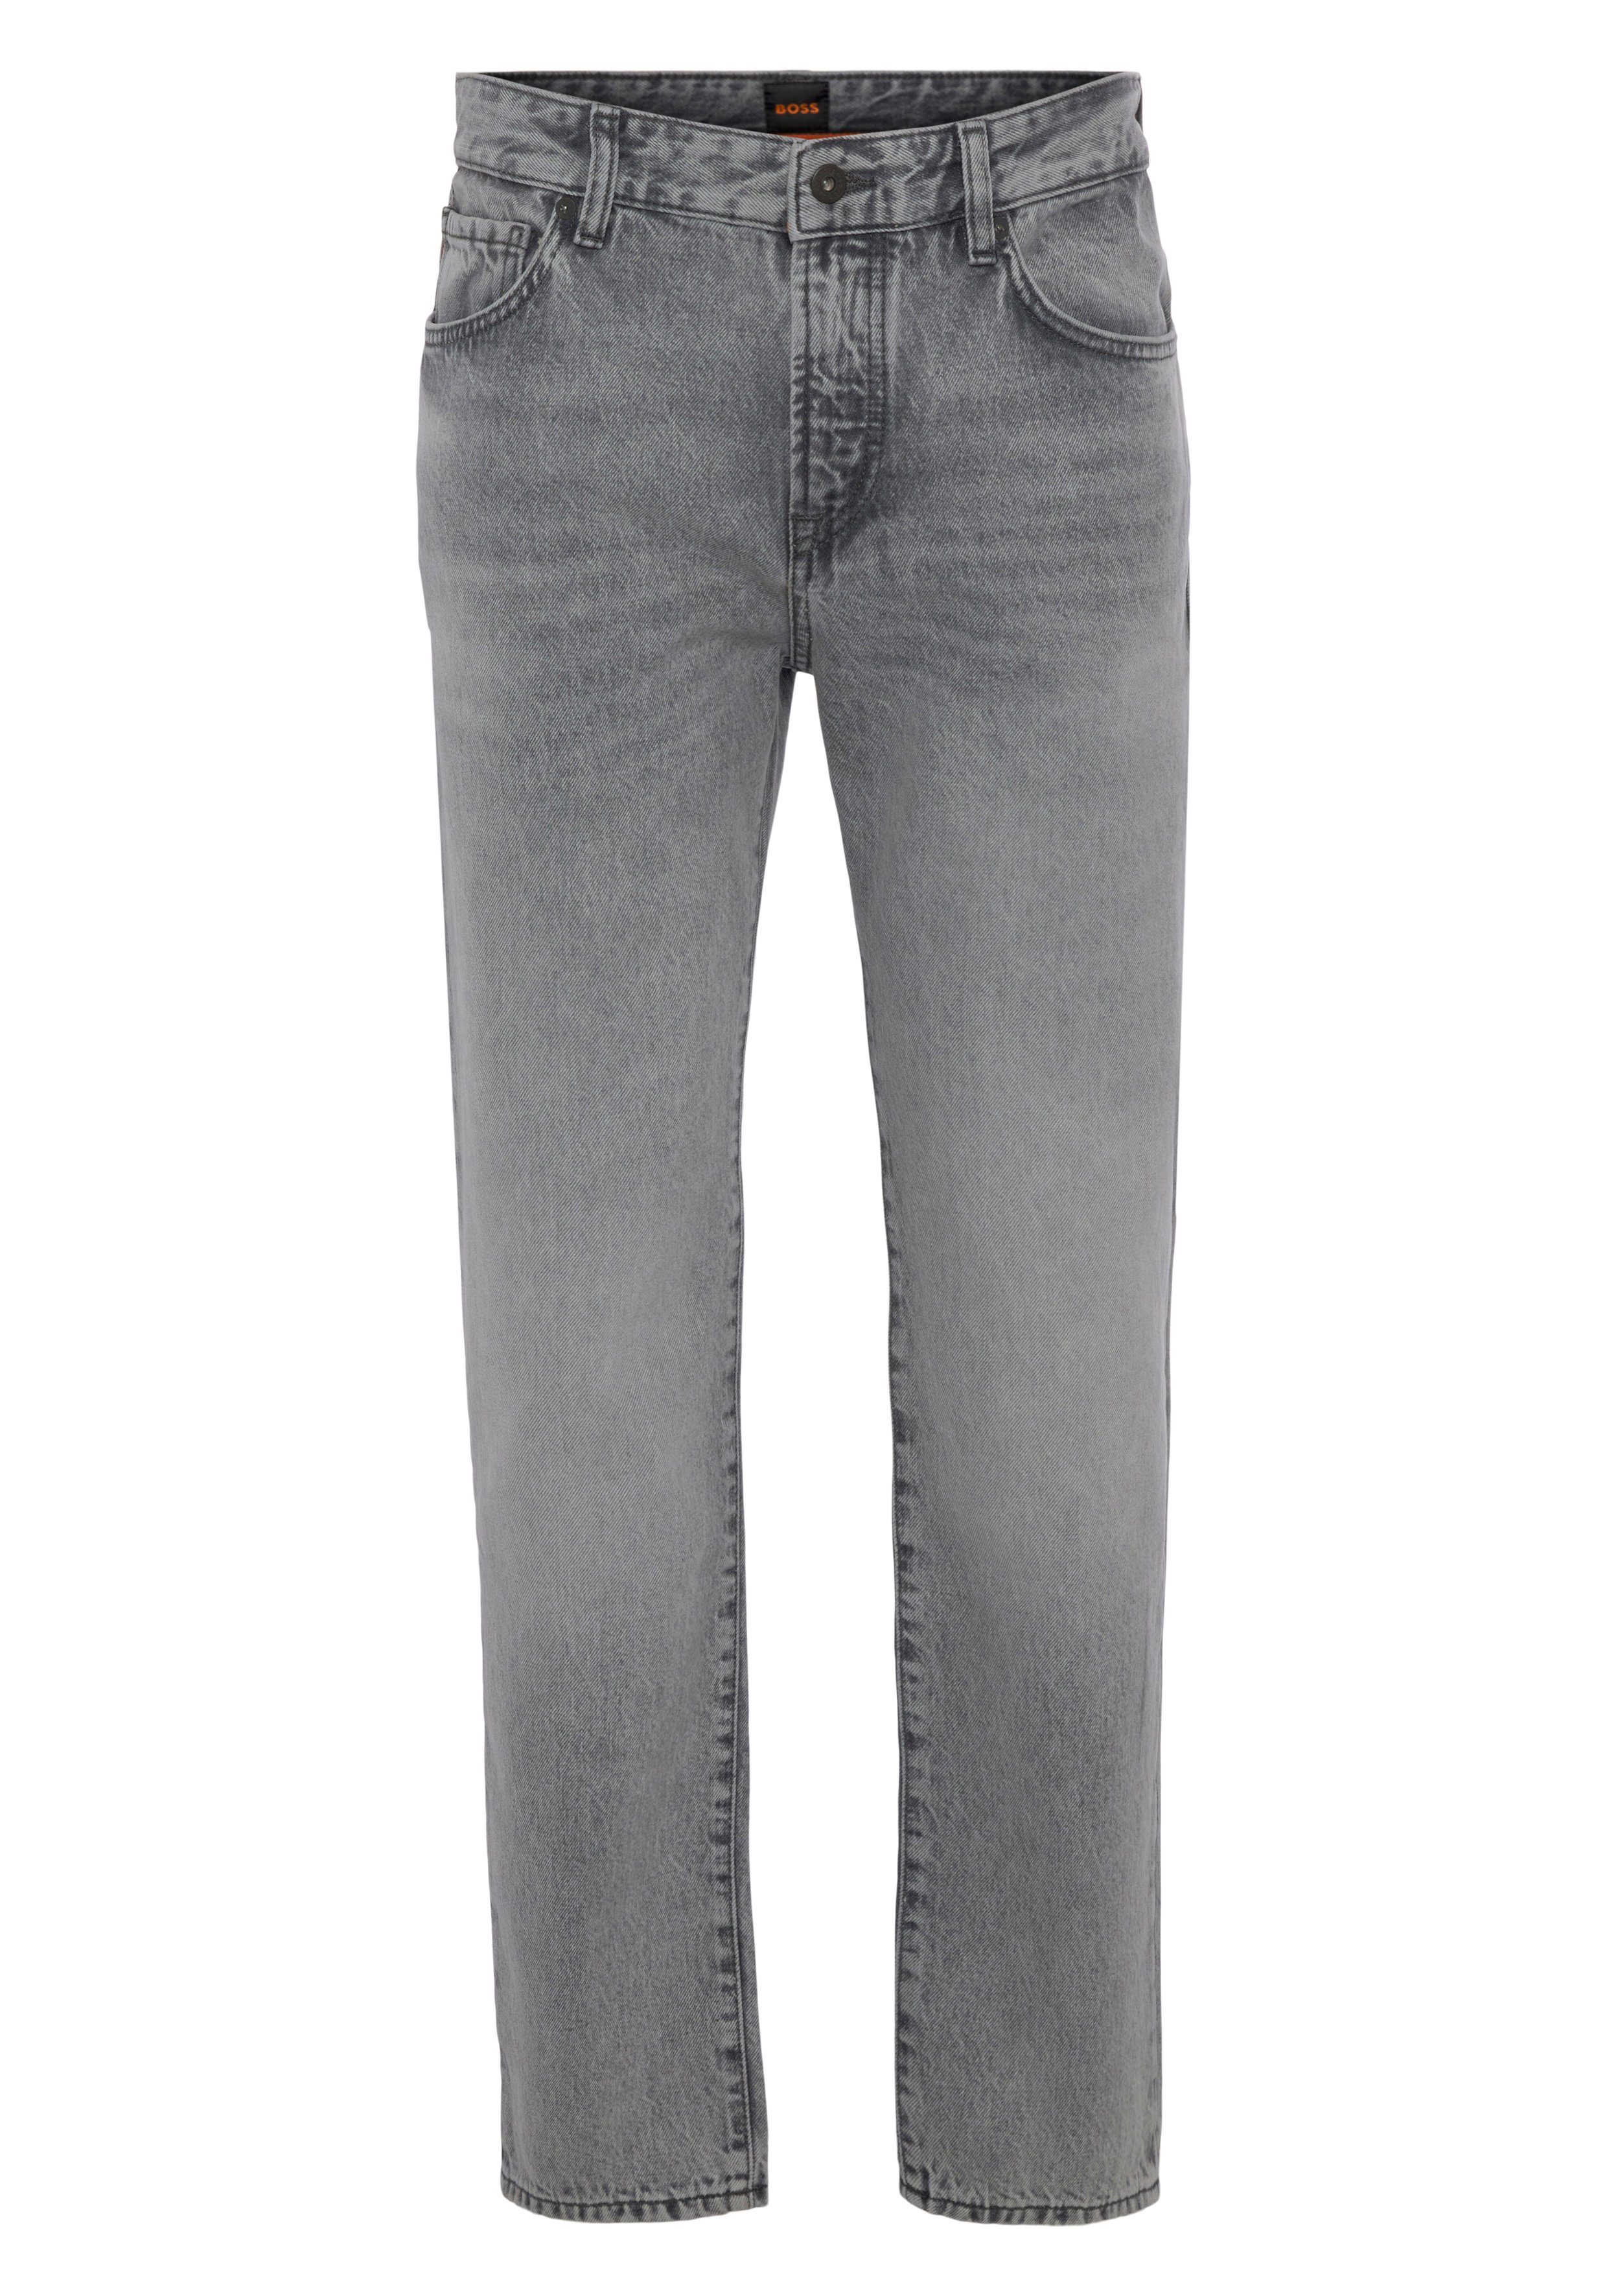 BOSS ORANGE Gerade Jeans mit pastellgrau Leder-Badge